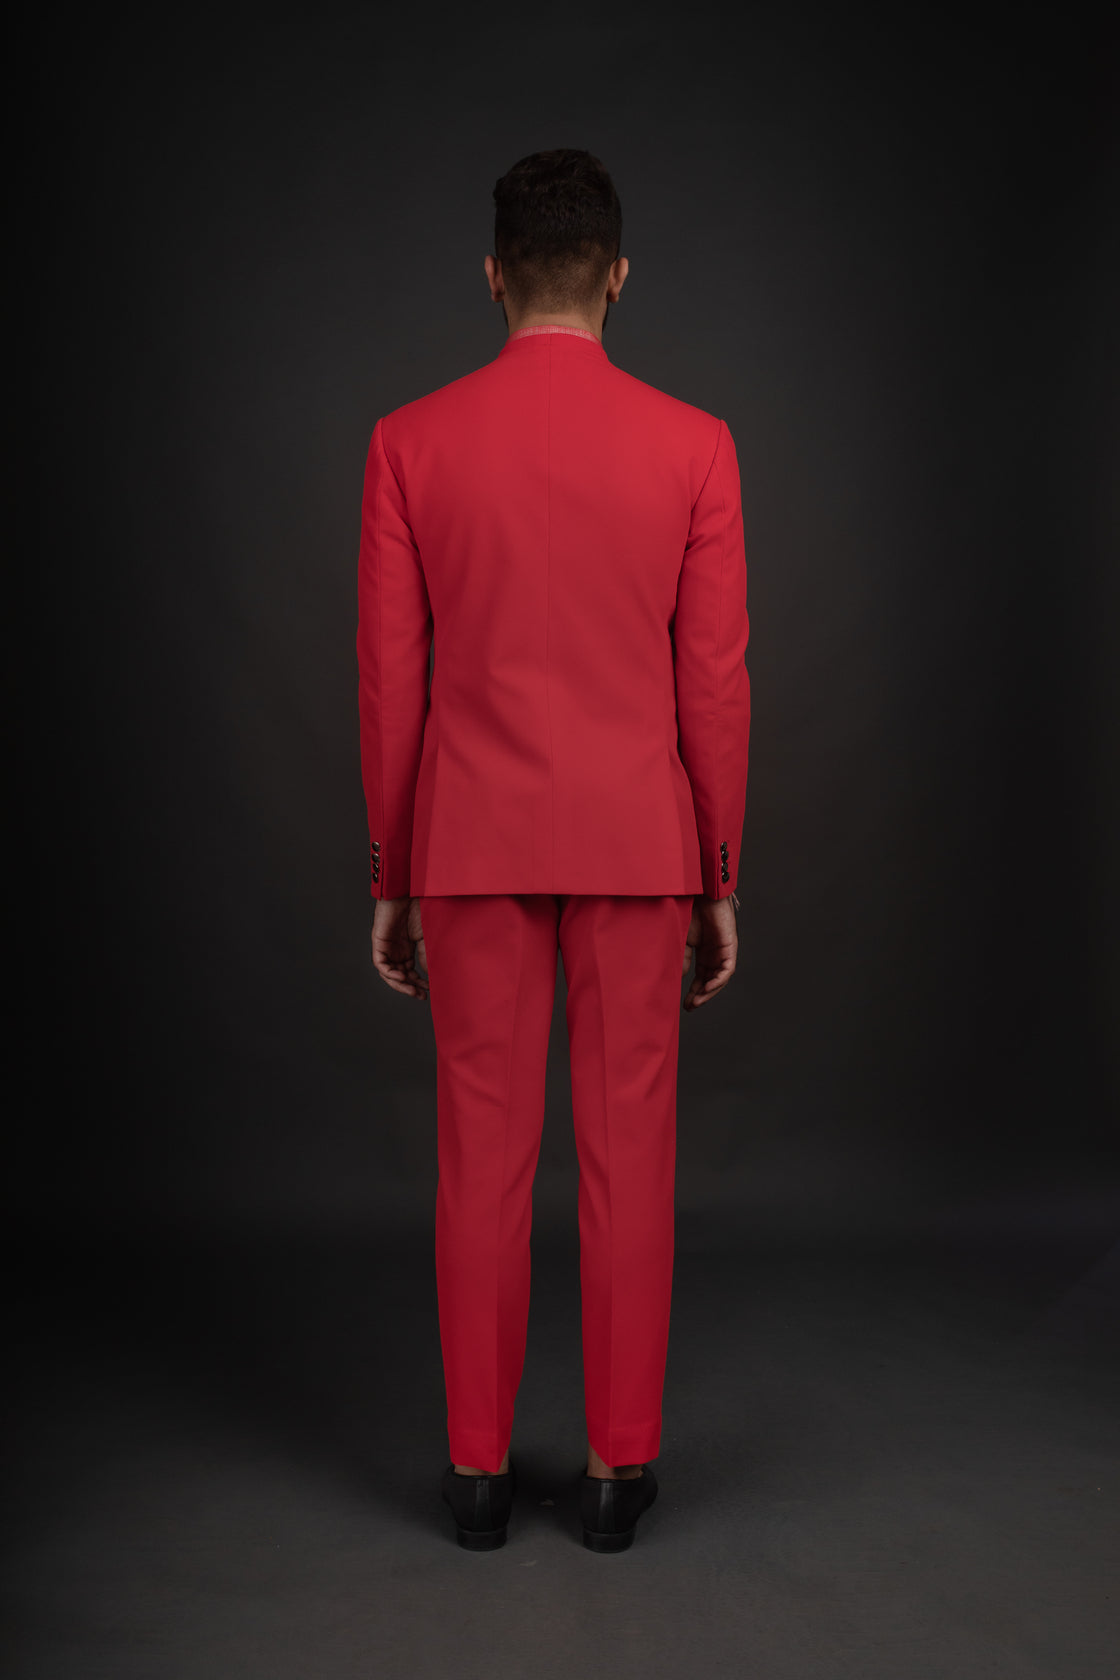 Red Bandhgala, Shirt, & Trousers